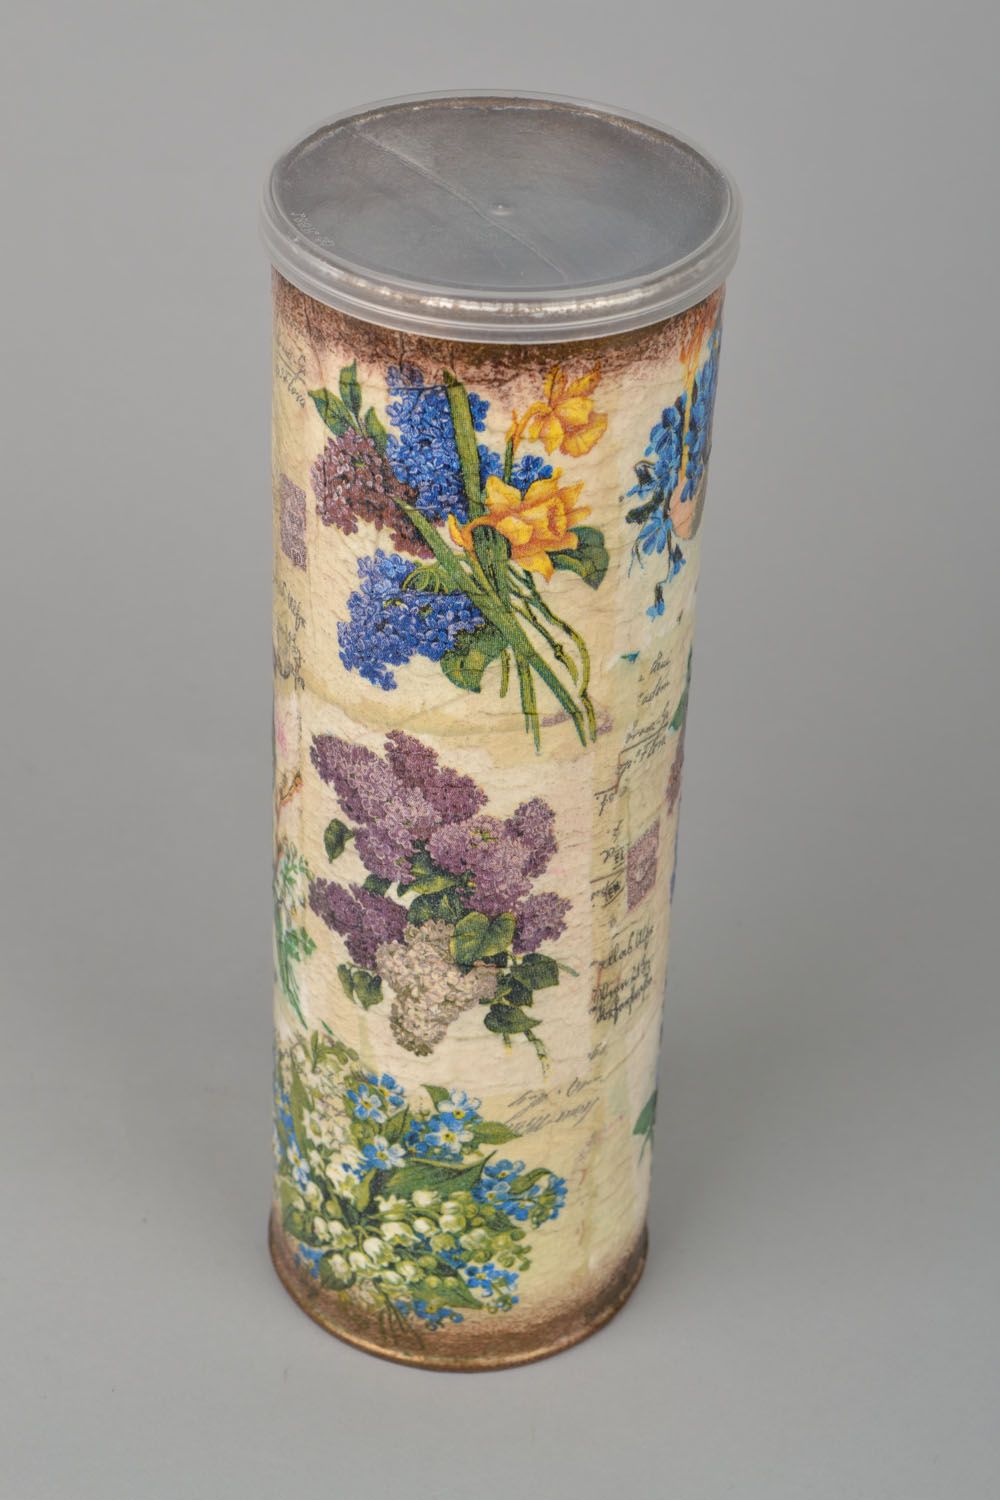 15 oz decorative handmade jar in floral design with lid 0,15 lb photo 5